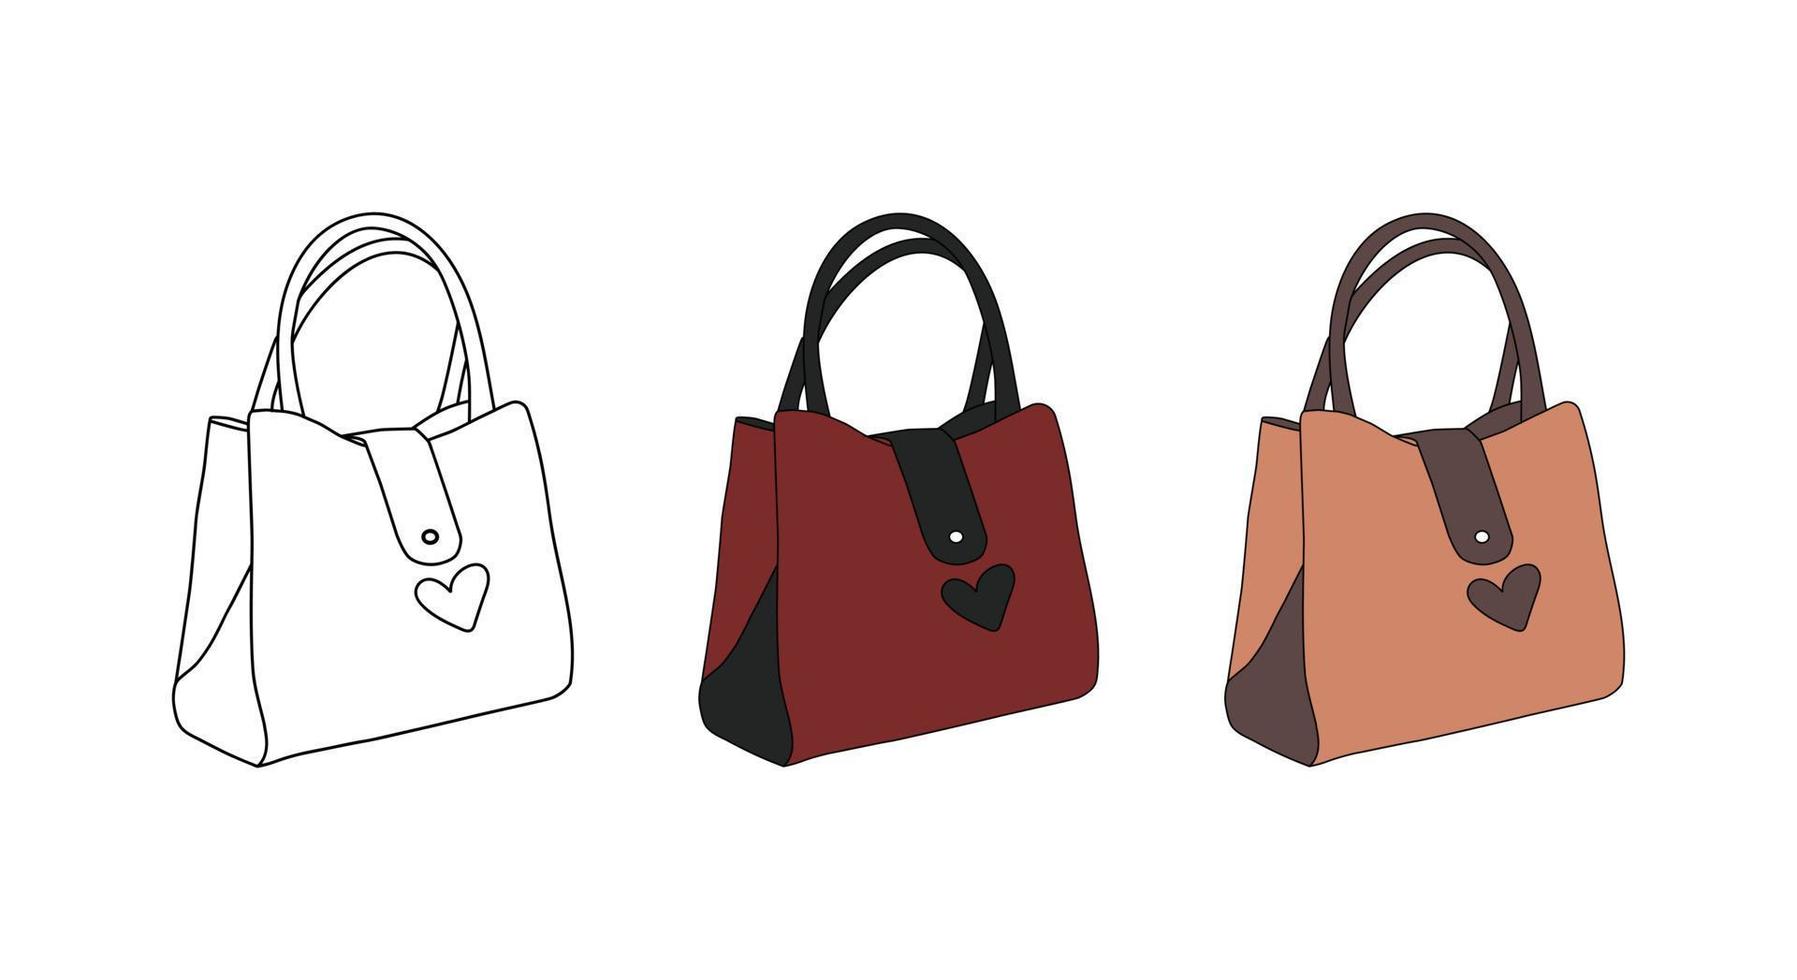 Women stylish leather handbags set, woman purse, zipper bags with vector illustration